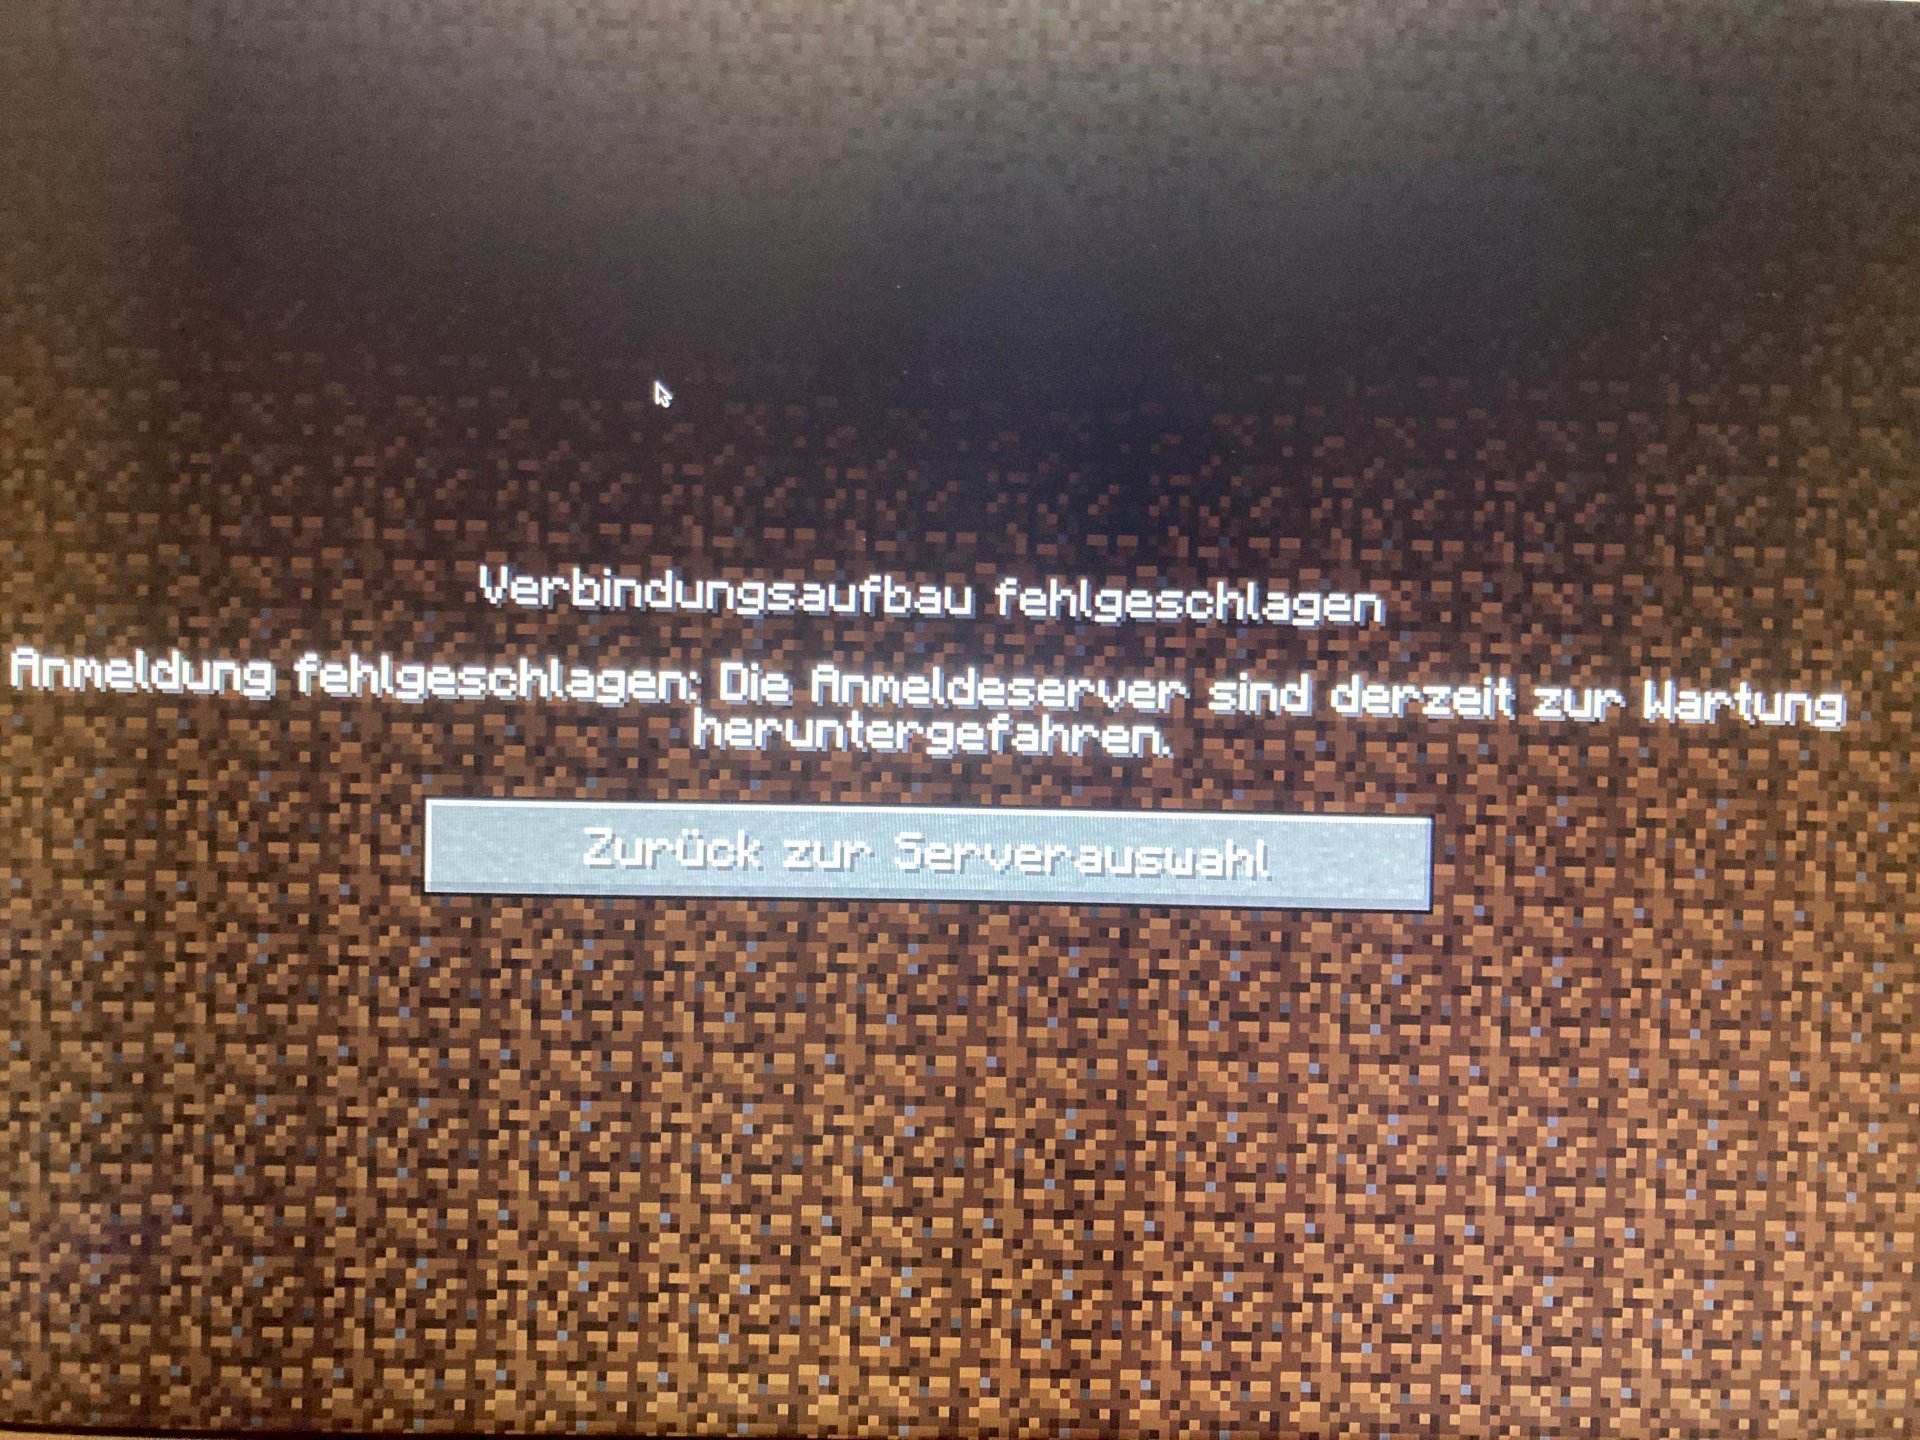 Minecraft: login servers down for maintenance